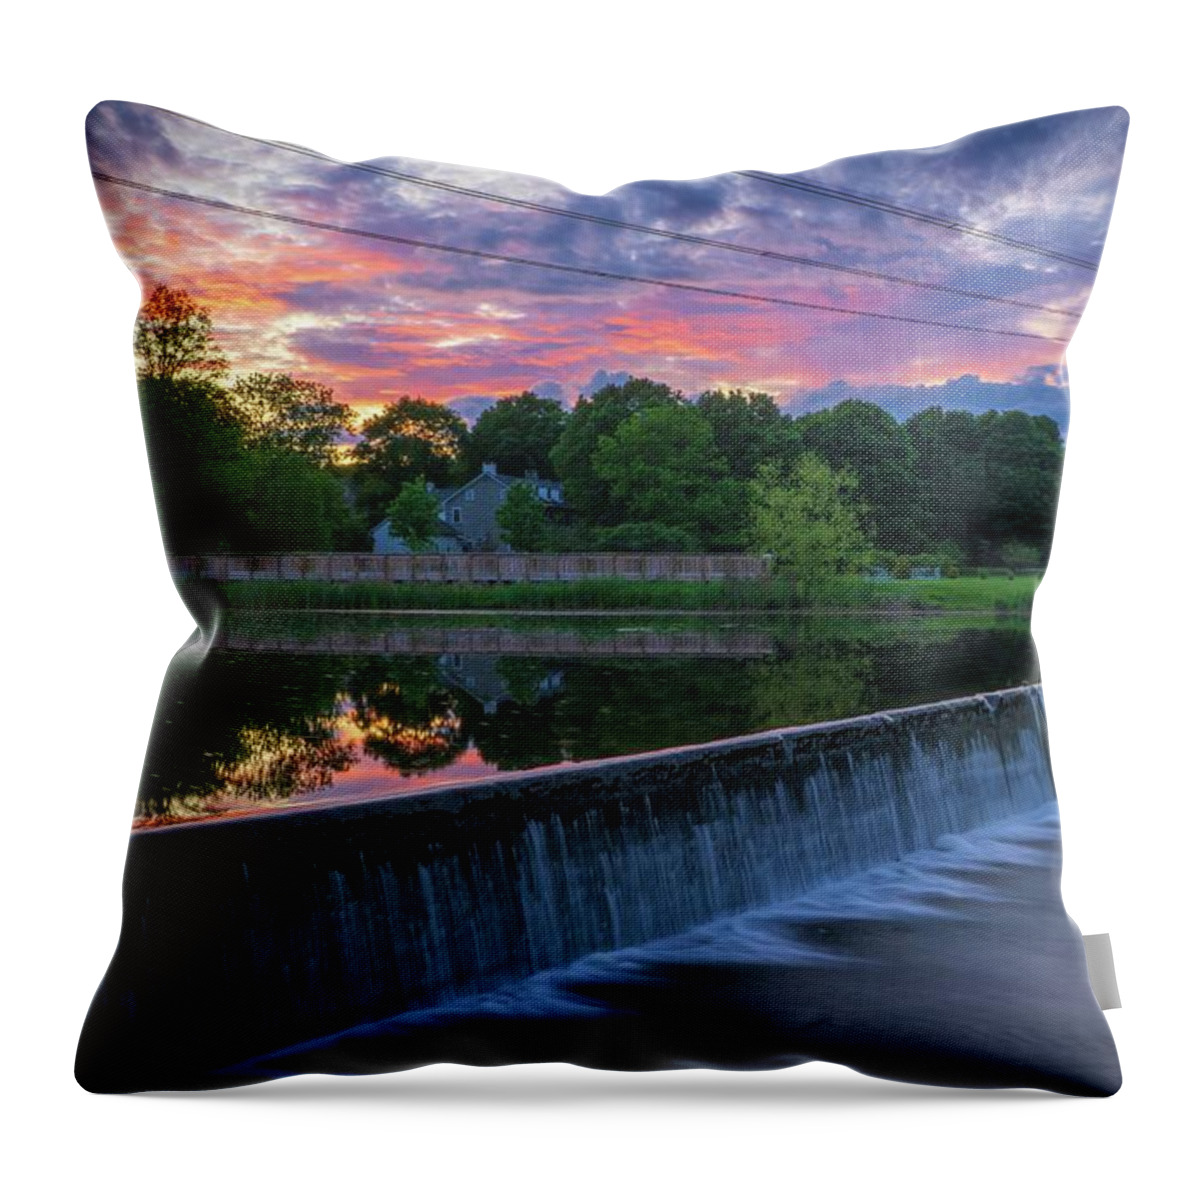 Sunset Throw Pillow featuring the photograph Wehr's Dam Spectacular Sunset by Jason Fink